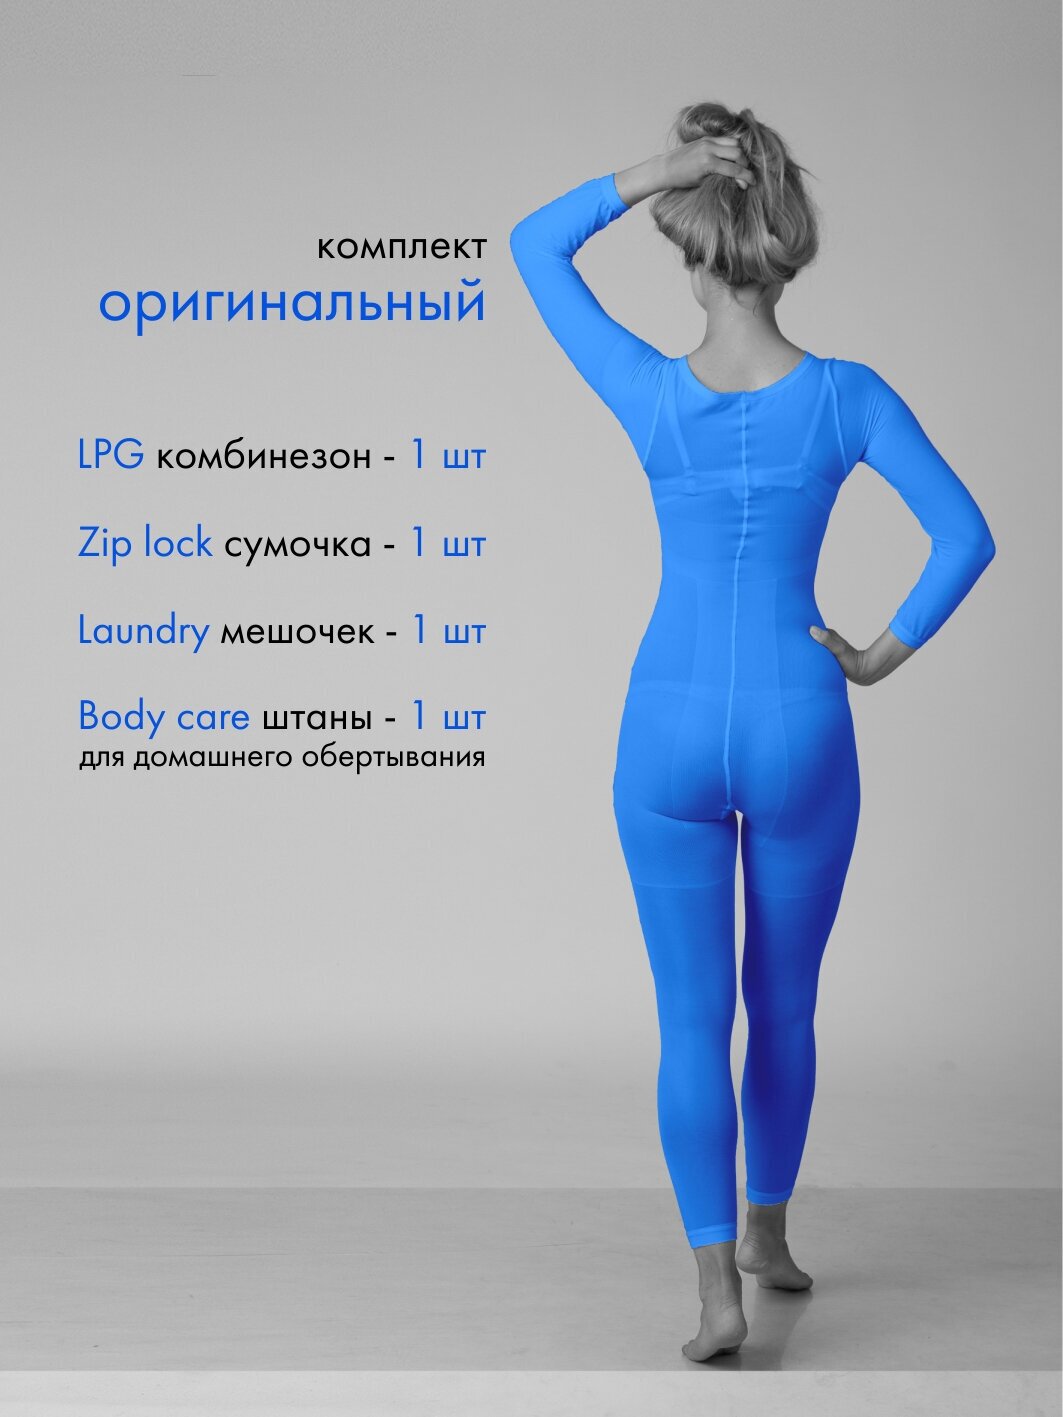 Набор: LPG костюм для LPG массажа, синий, размер XXXL, 54-60, 120 den LPG комбинезон лпж костюм - фотография № 2